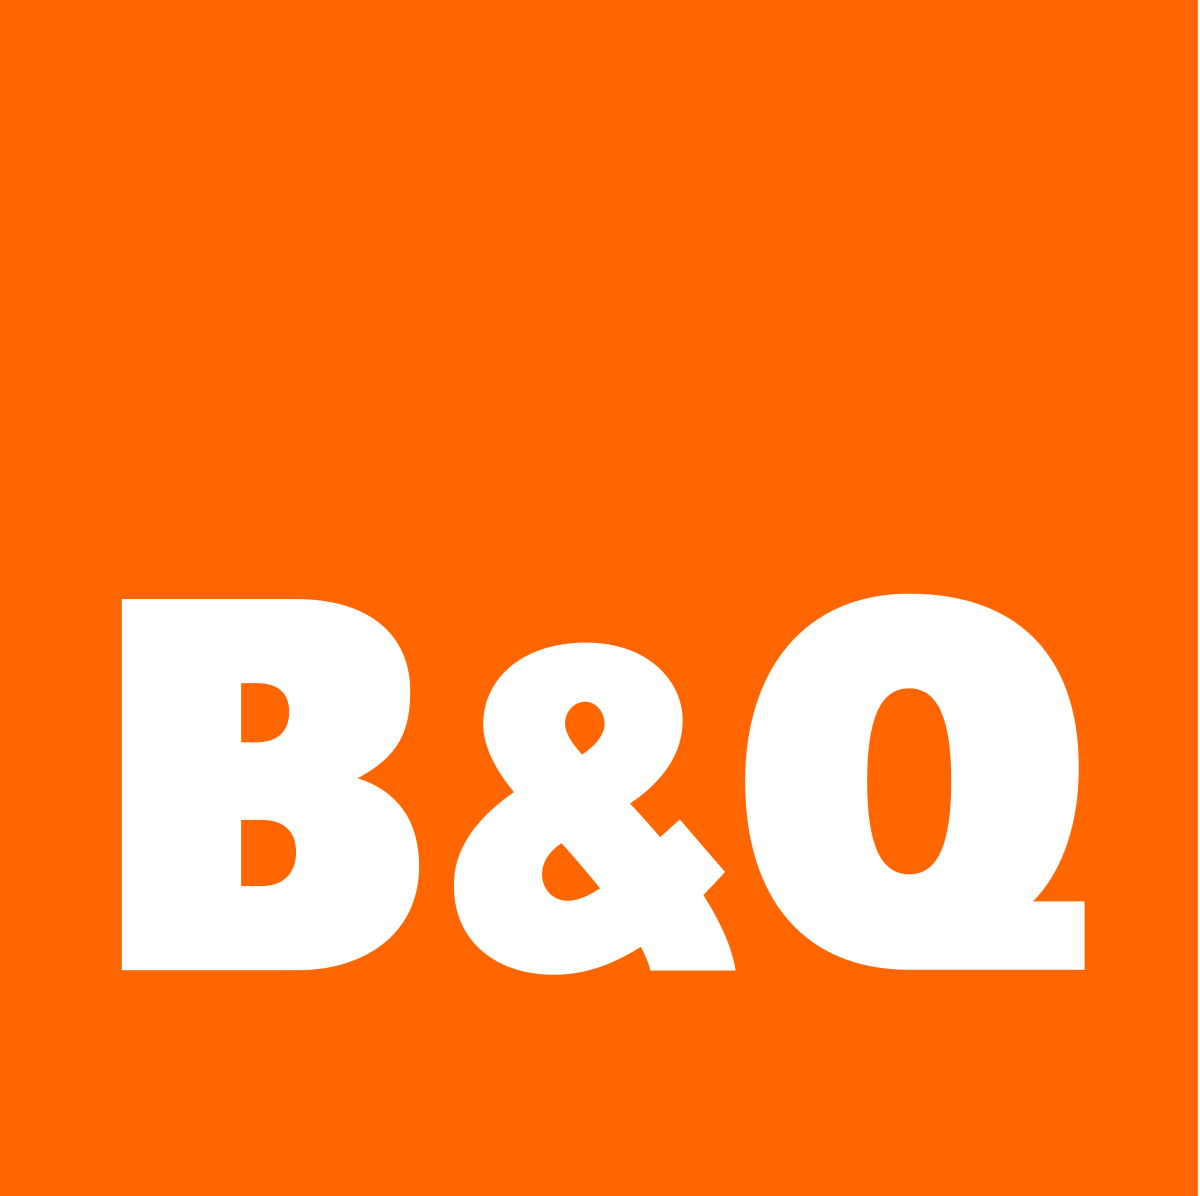 1200px-B&Q_company_logo.svg